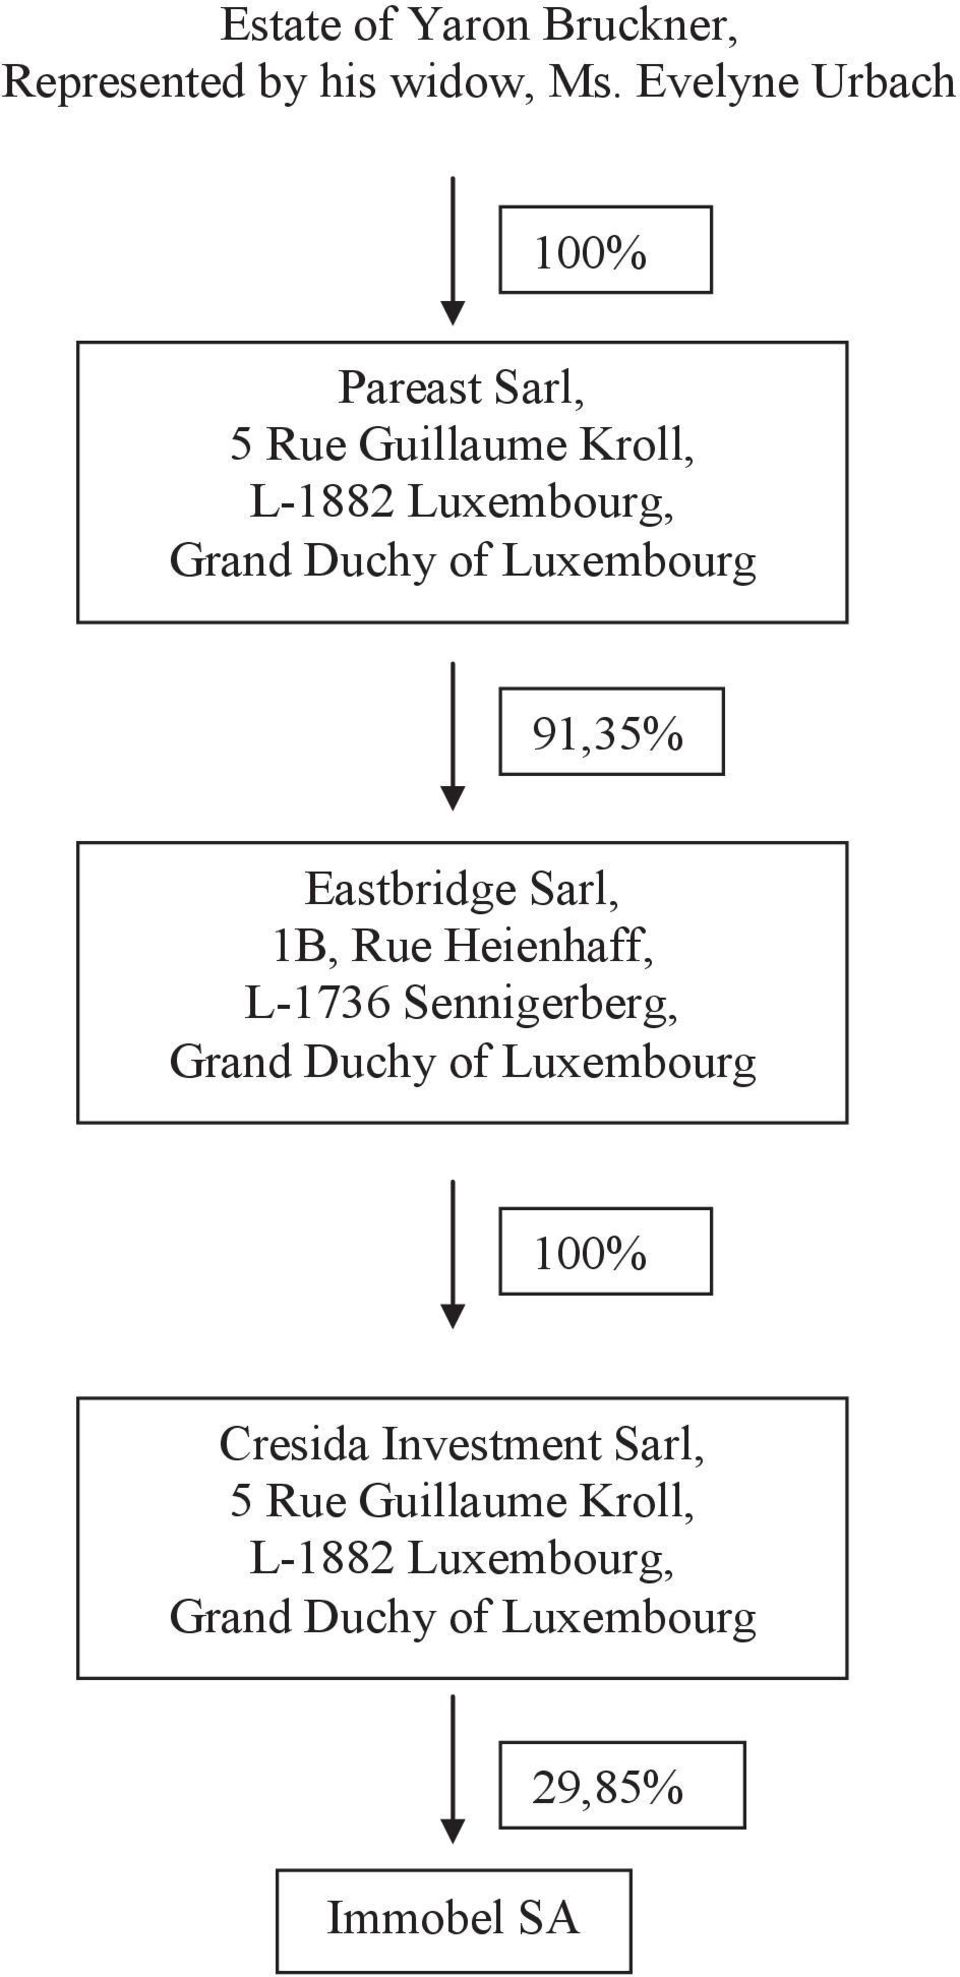 Luxembourg 91,35% Eastbridge Sarl, 1B, Rue Heienhaff, L-1736 Sennigerberg, Grand Duchy of